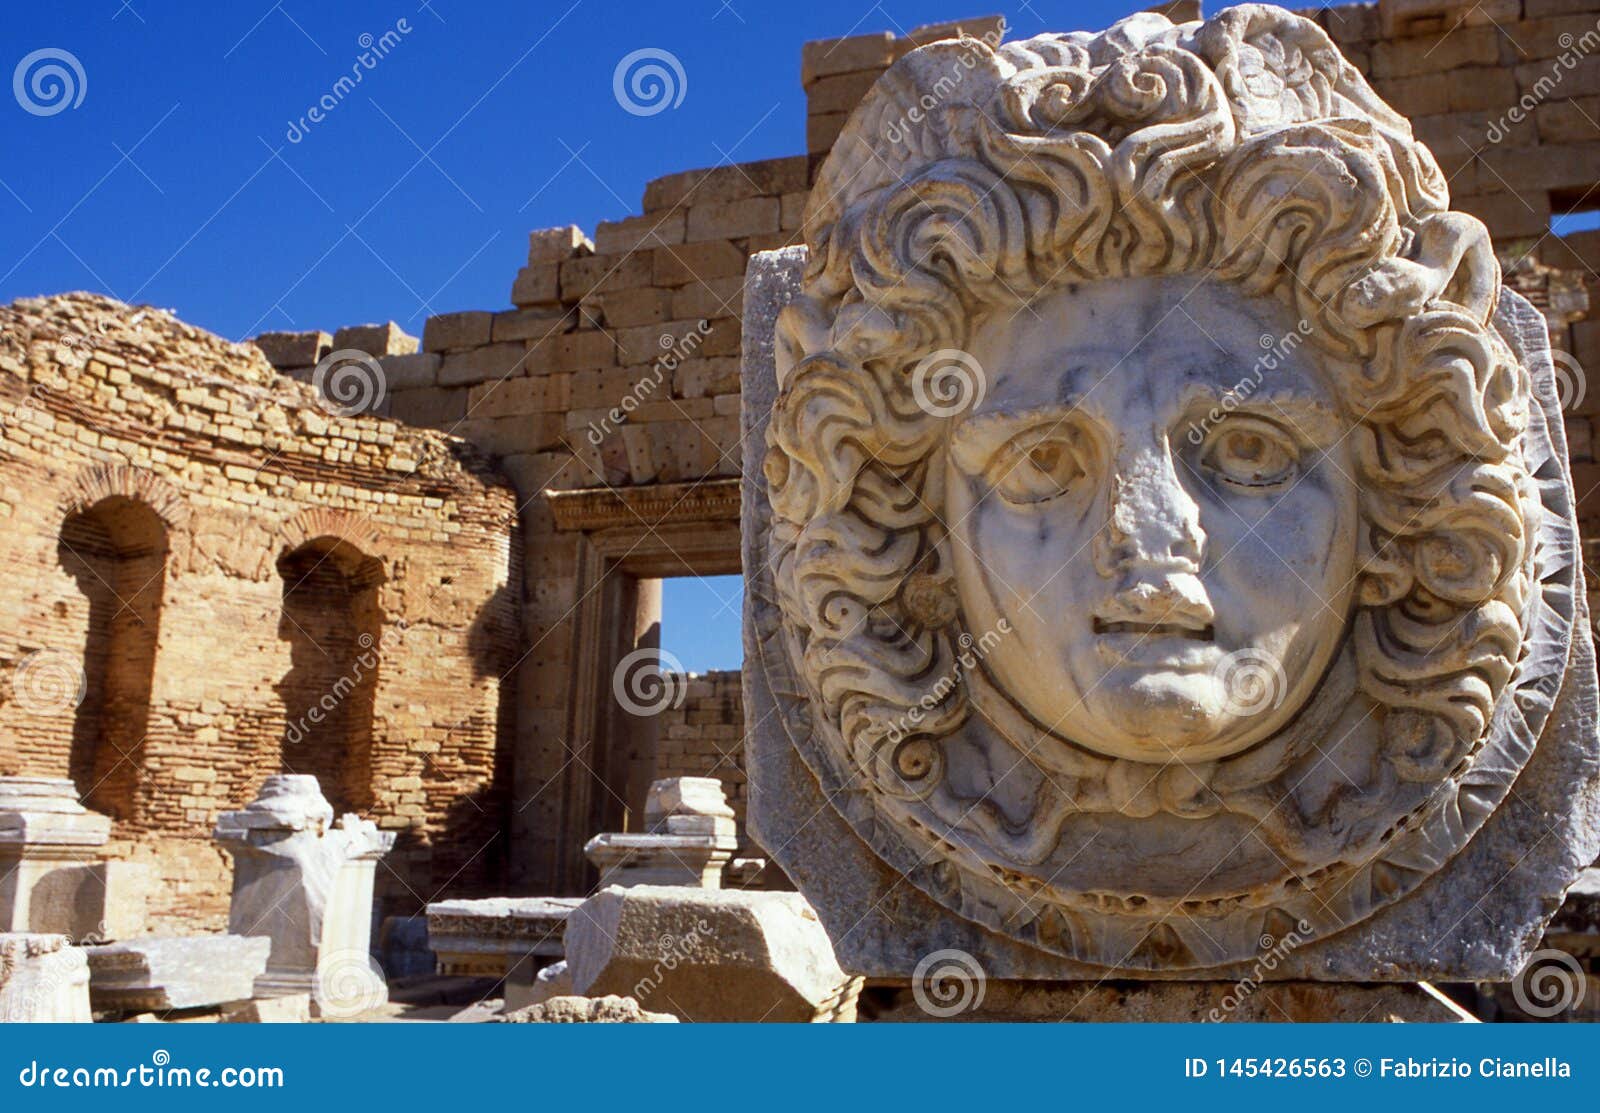 leptis magna archeology ruins - libya